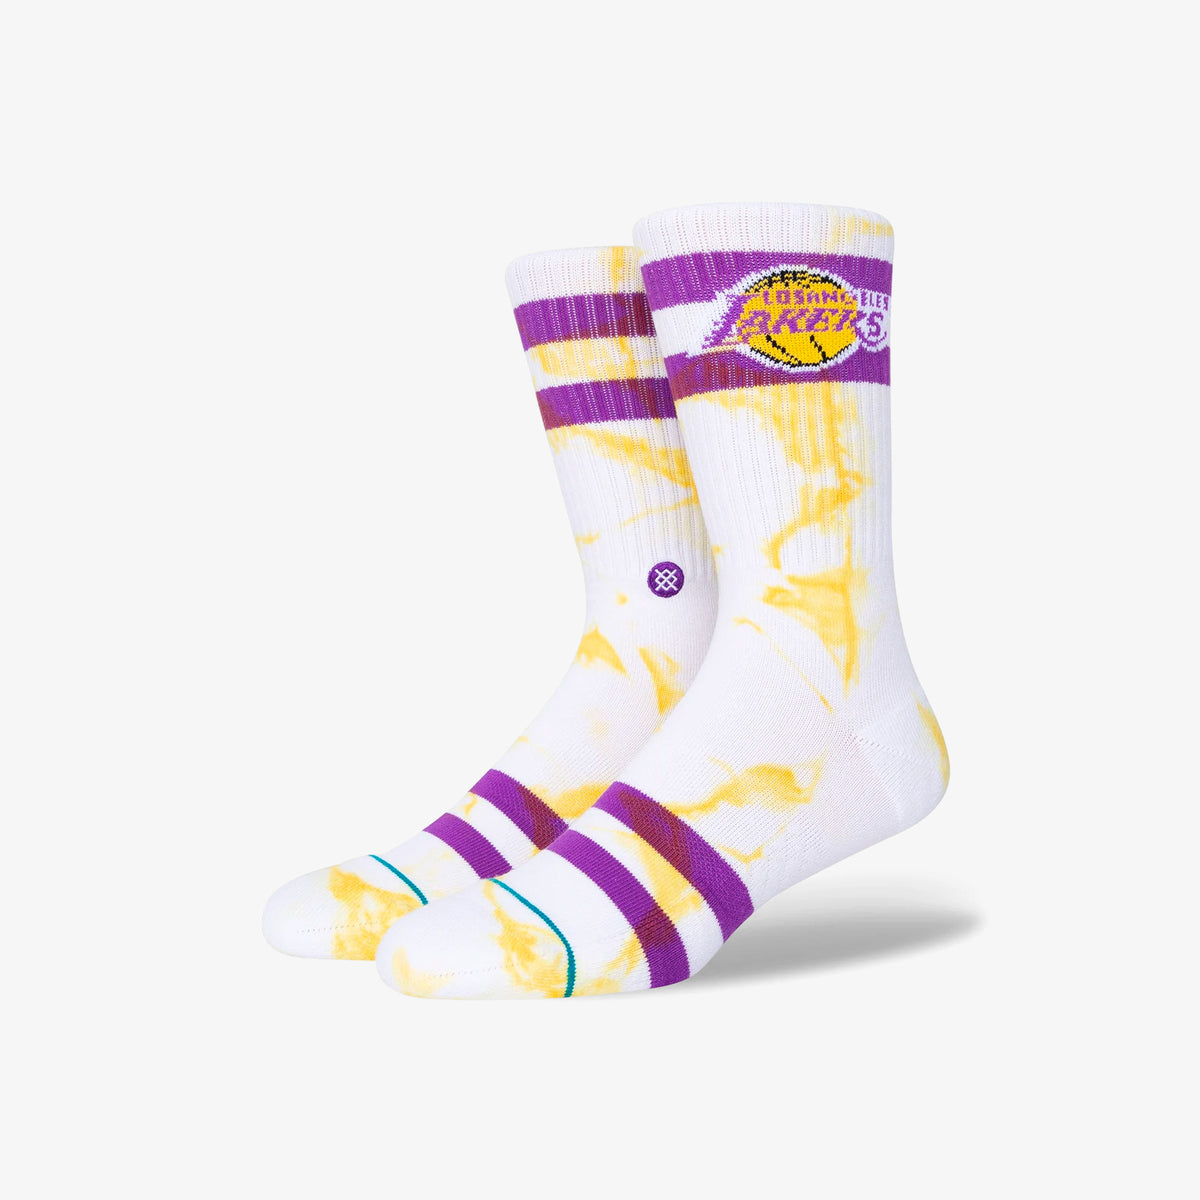 Los Angeles Lakers Dyed Socks